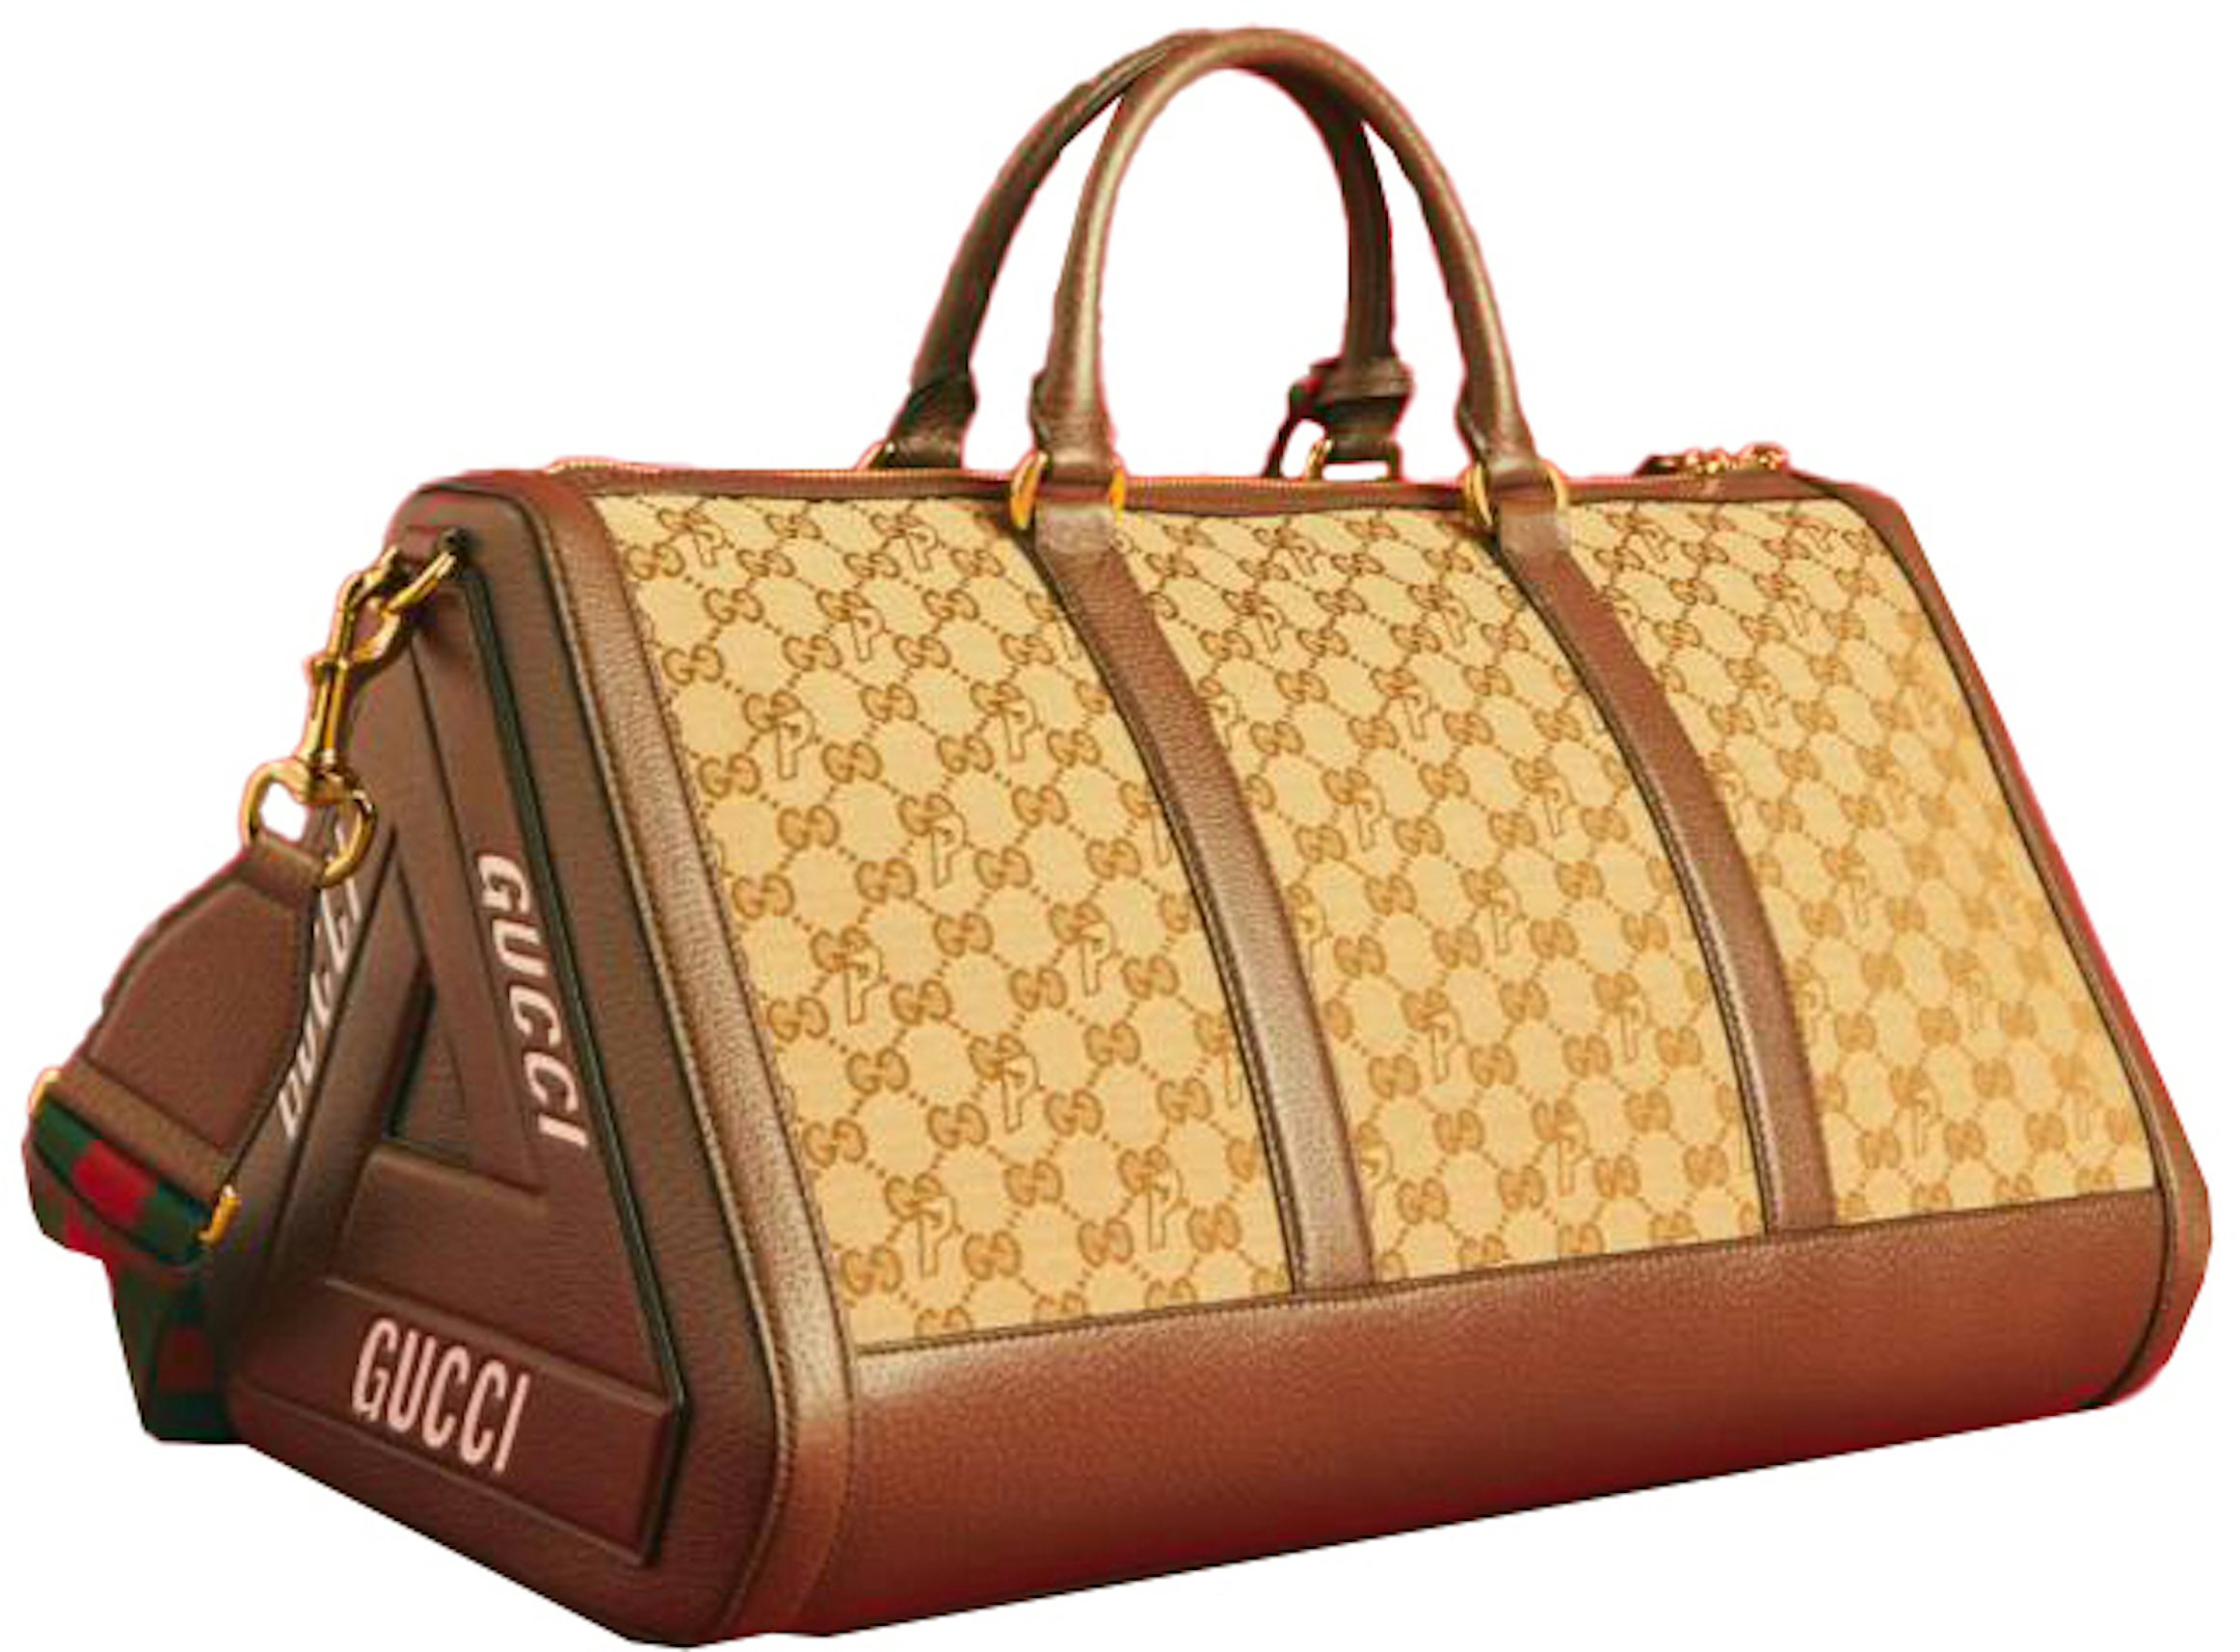 GG Large Canvas Duffel Bag in Beige - Gucci